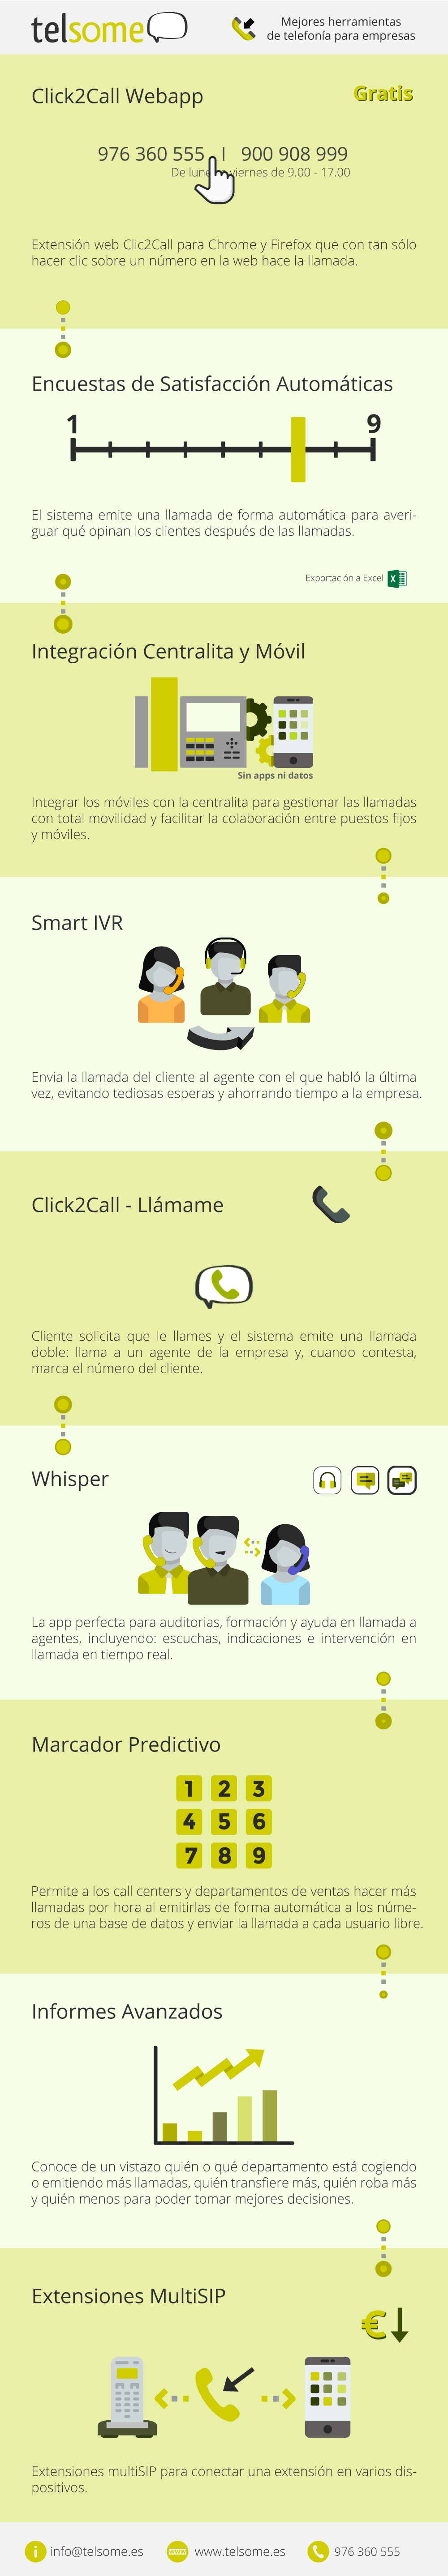 telsome infografia empresa mejores herramientas telefonia